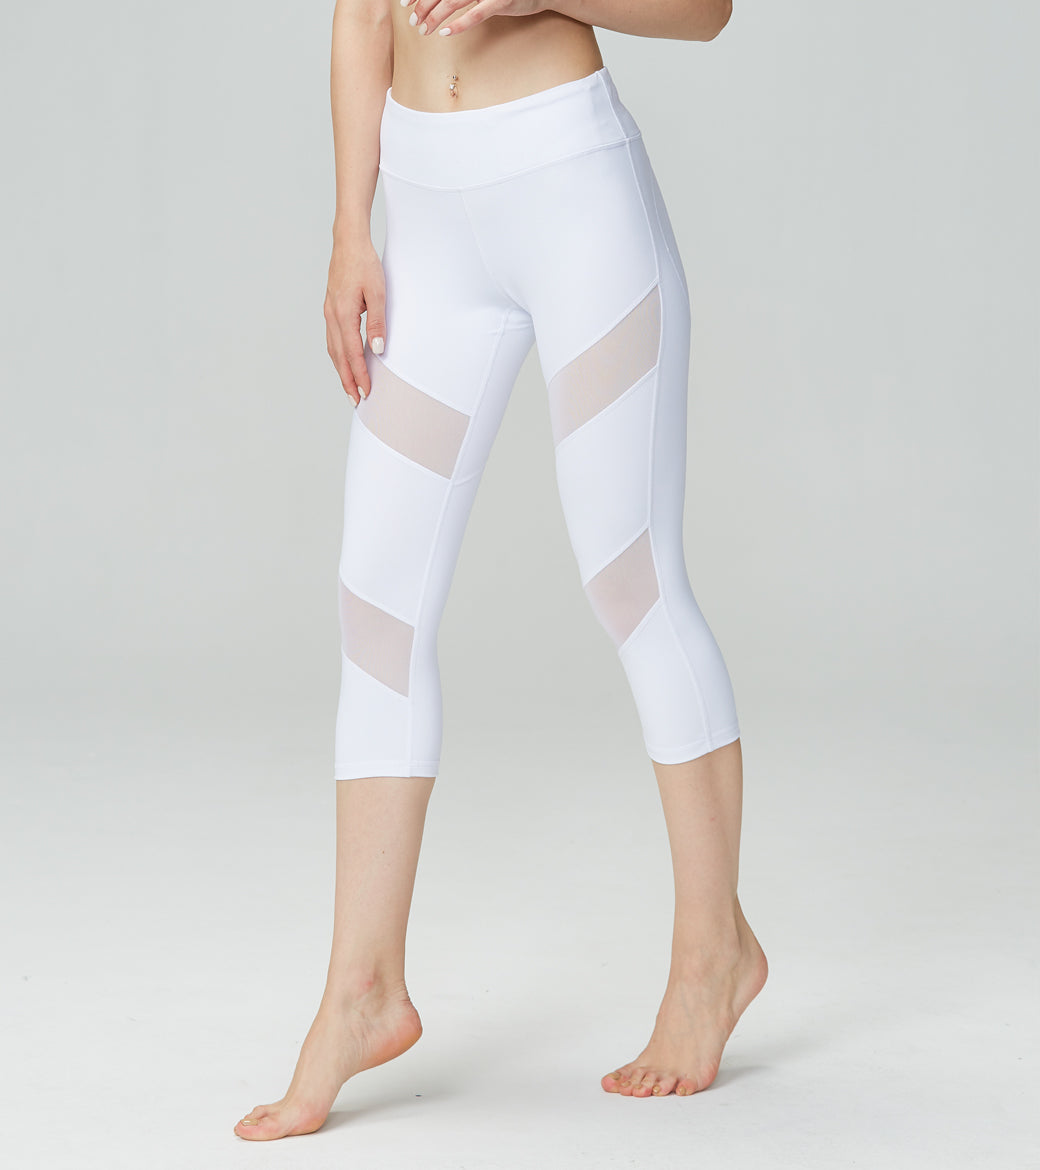 LOVESOFT White Mesh Workout High Waist Yoga Pants